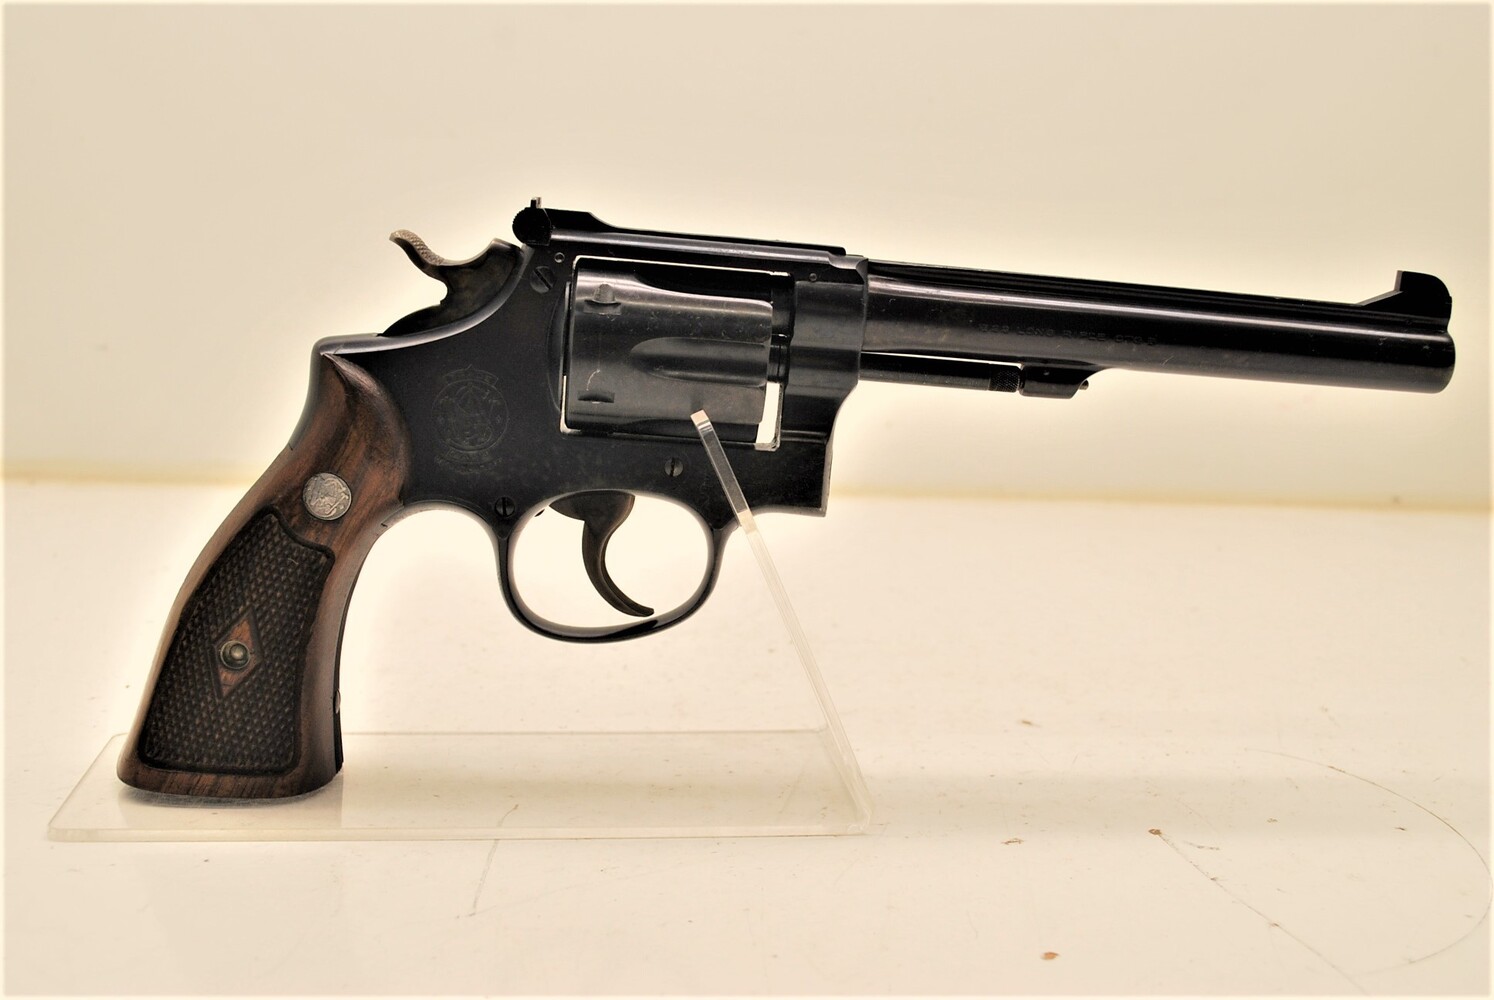 S&W K-22 Masterpiece .22LR 3rd Model Post War 6Rd Revolver Gold Box Smith Wesson